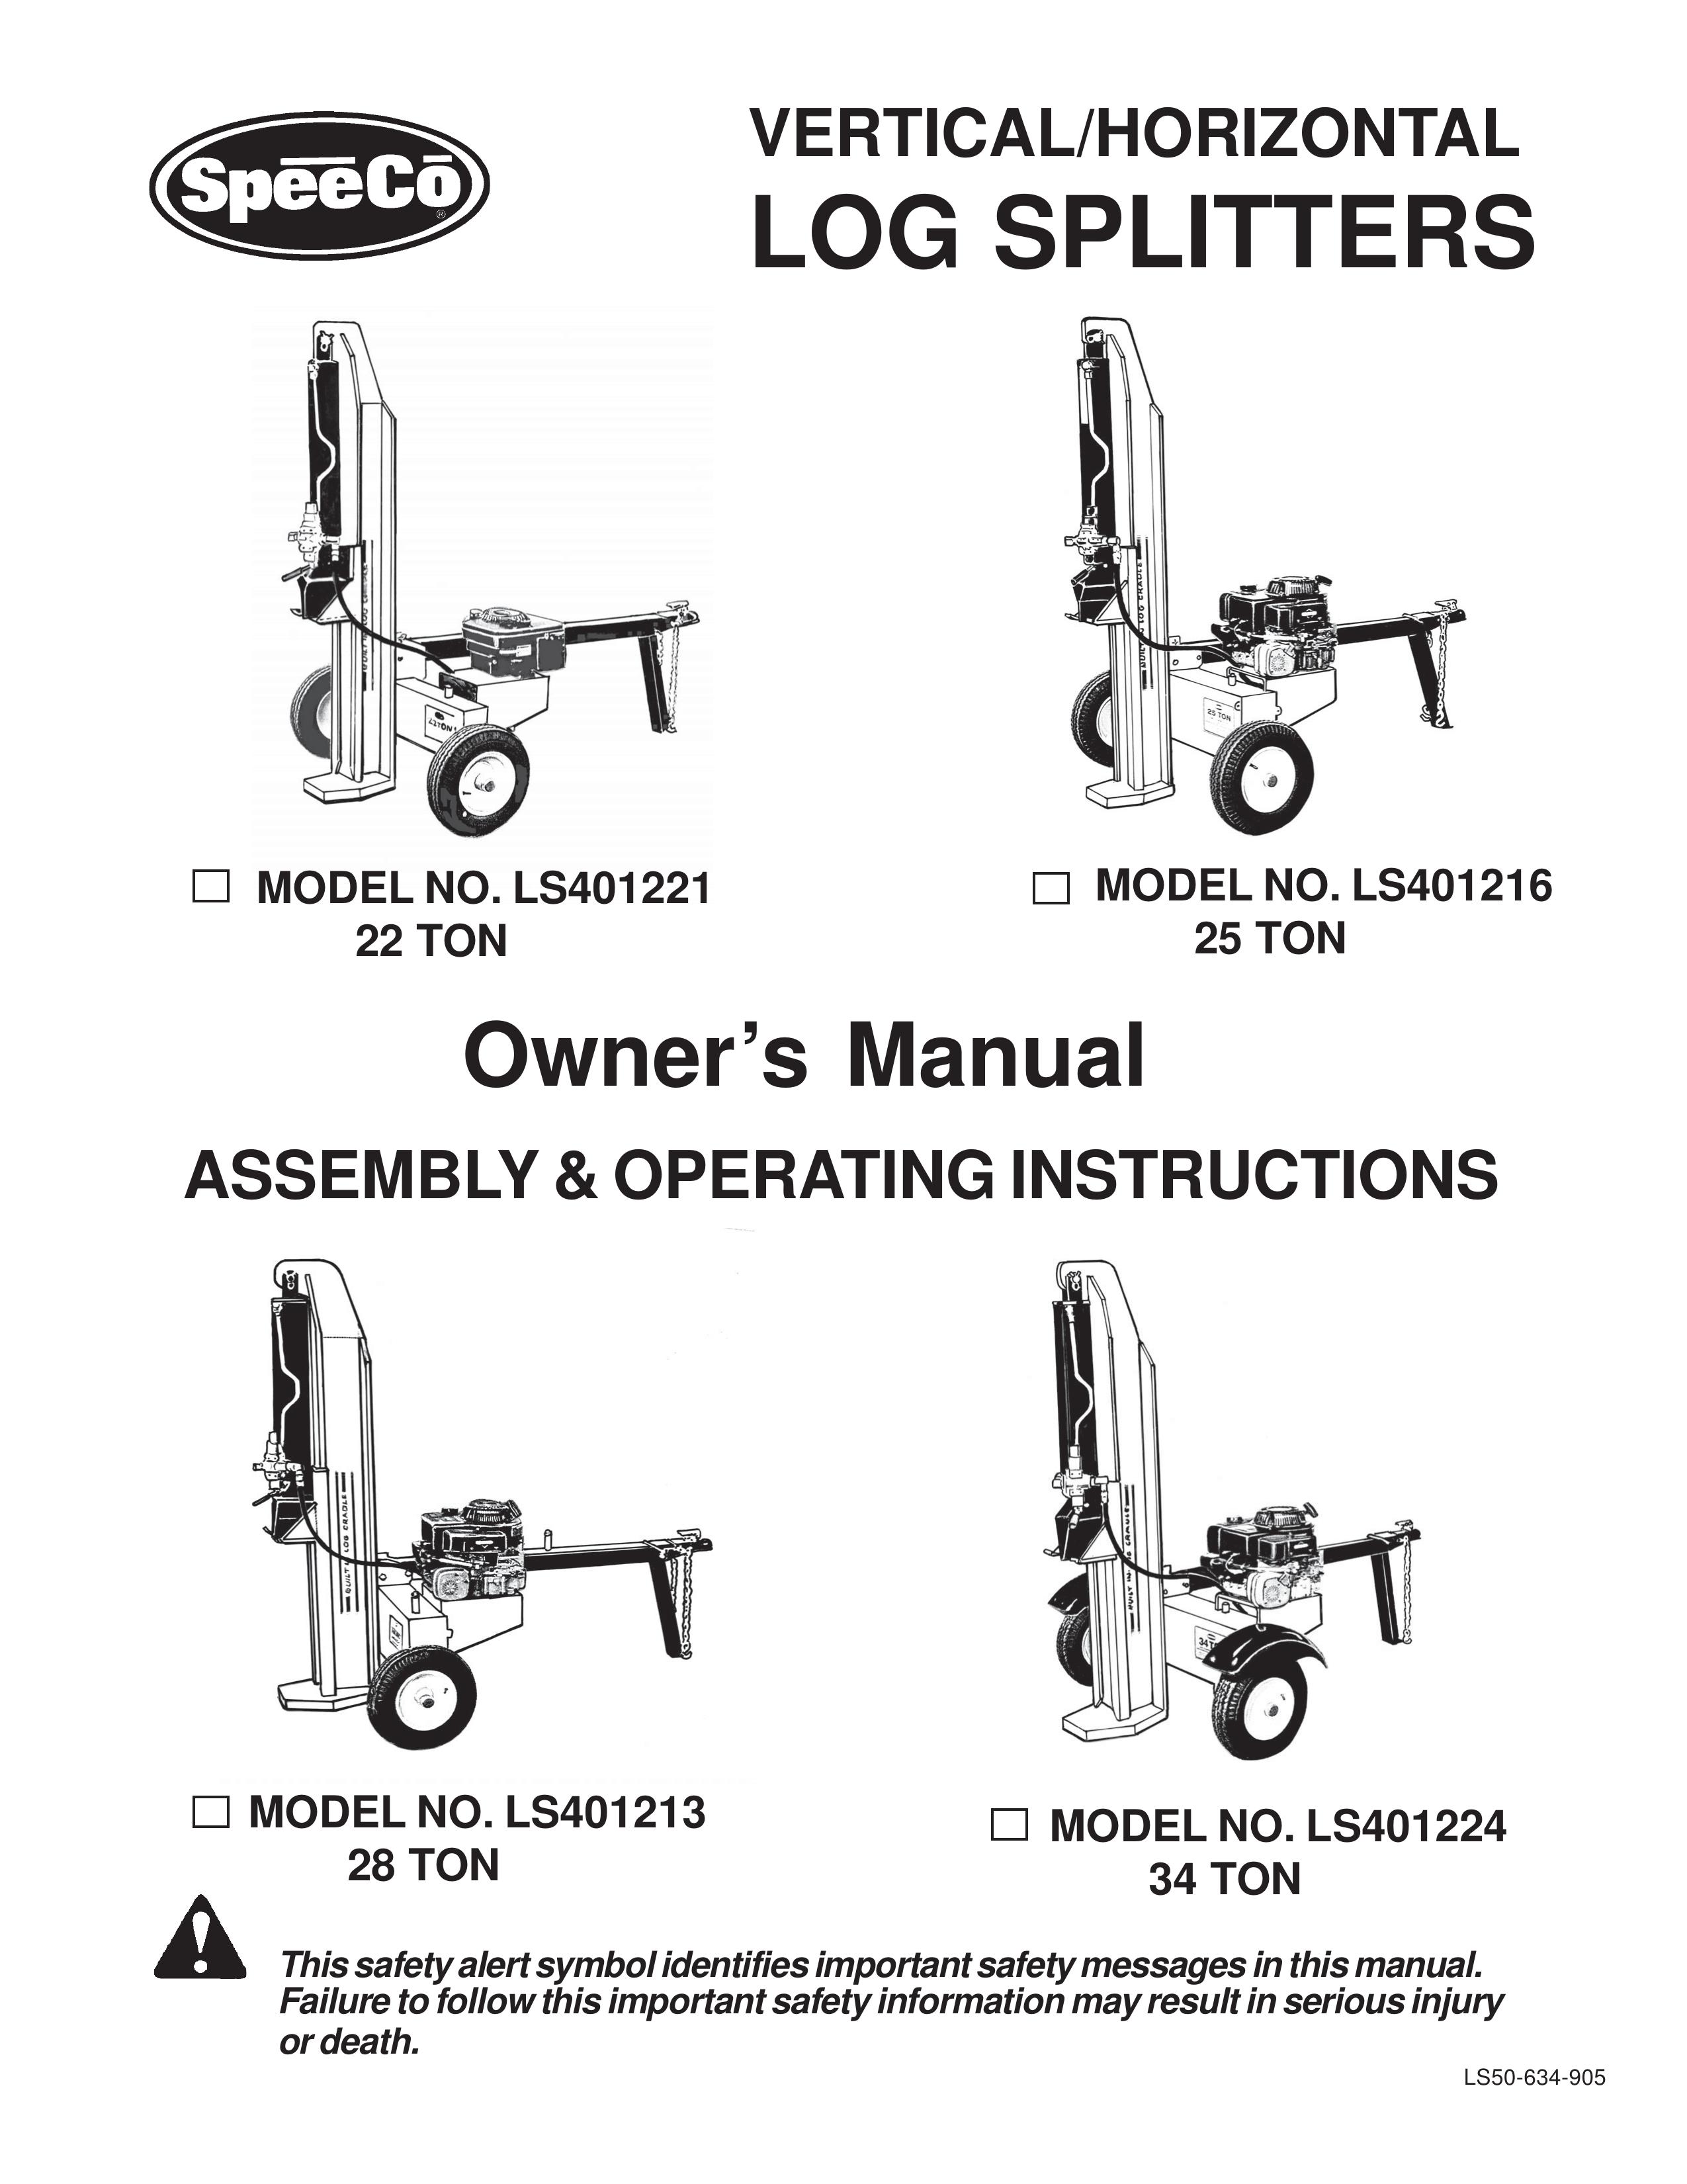 Briggs & Stratton LS401224 Log Splitter User Manual